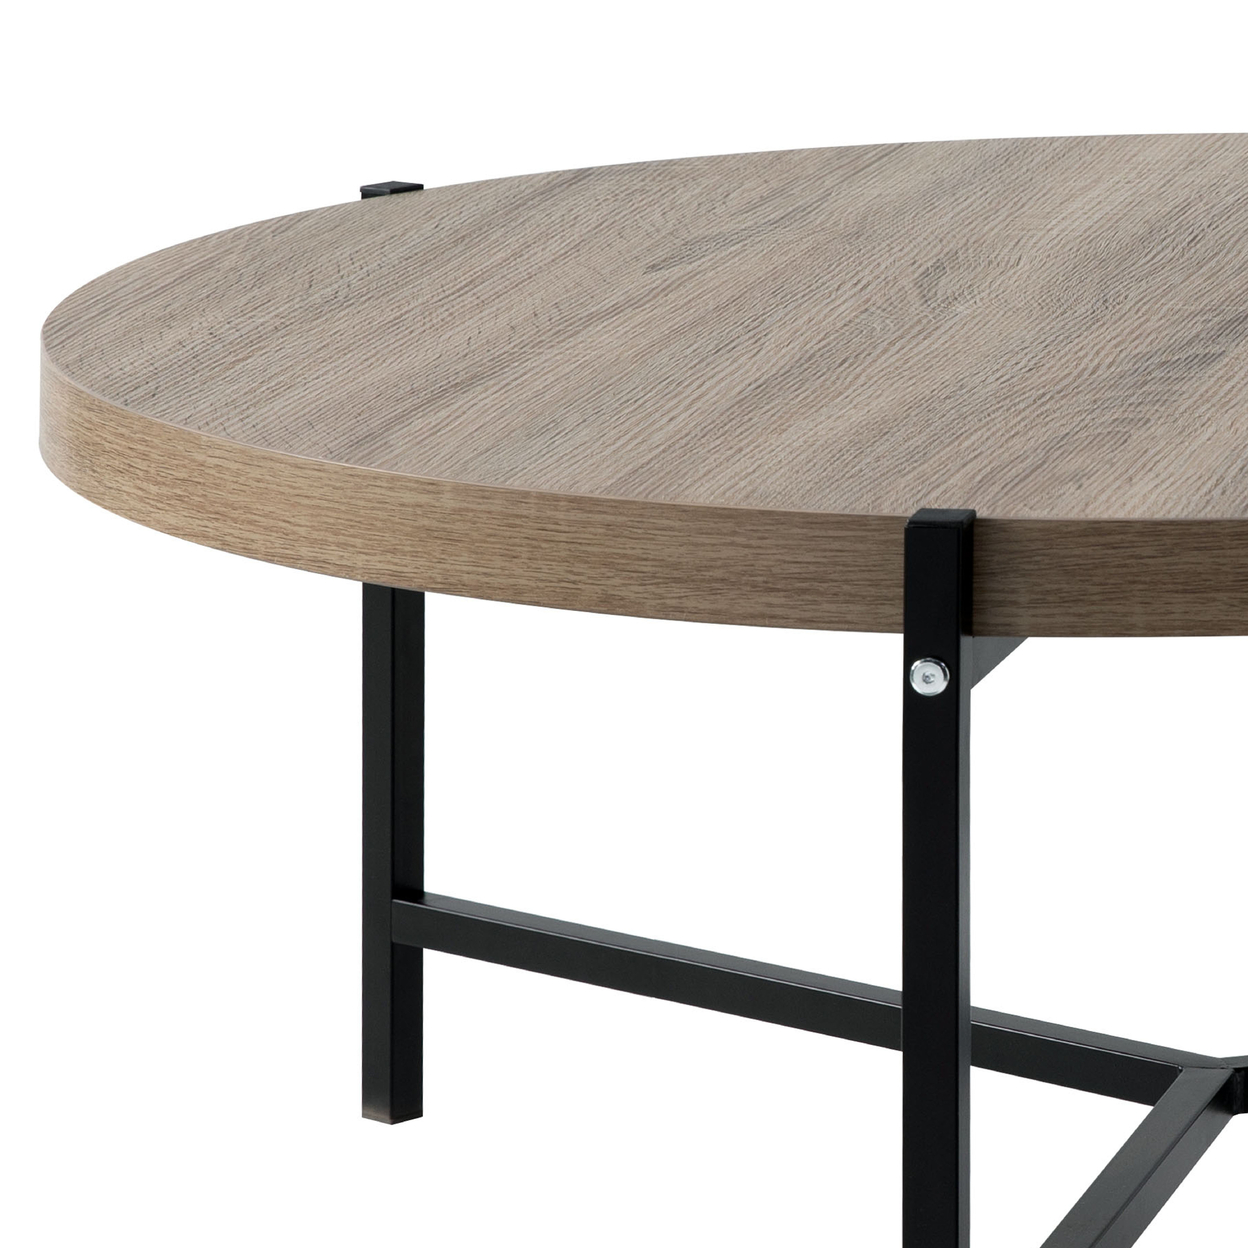 Wib 37 Inch Round Coffee Table, Sturdy Metal Frame, Black Base, Taupe - Saltoro Sherpi